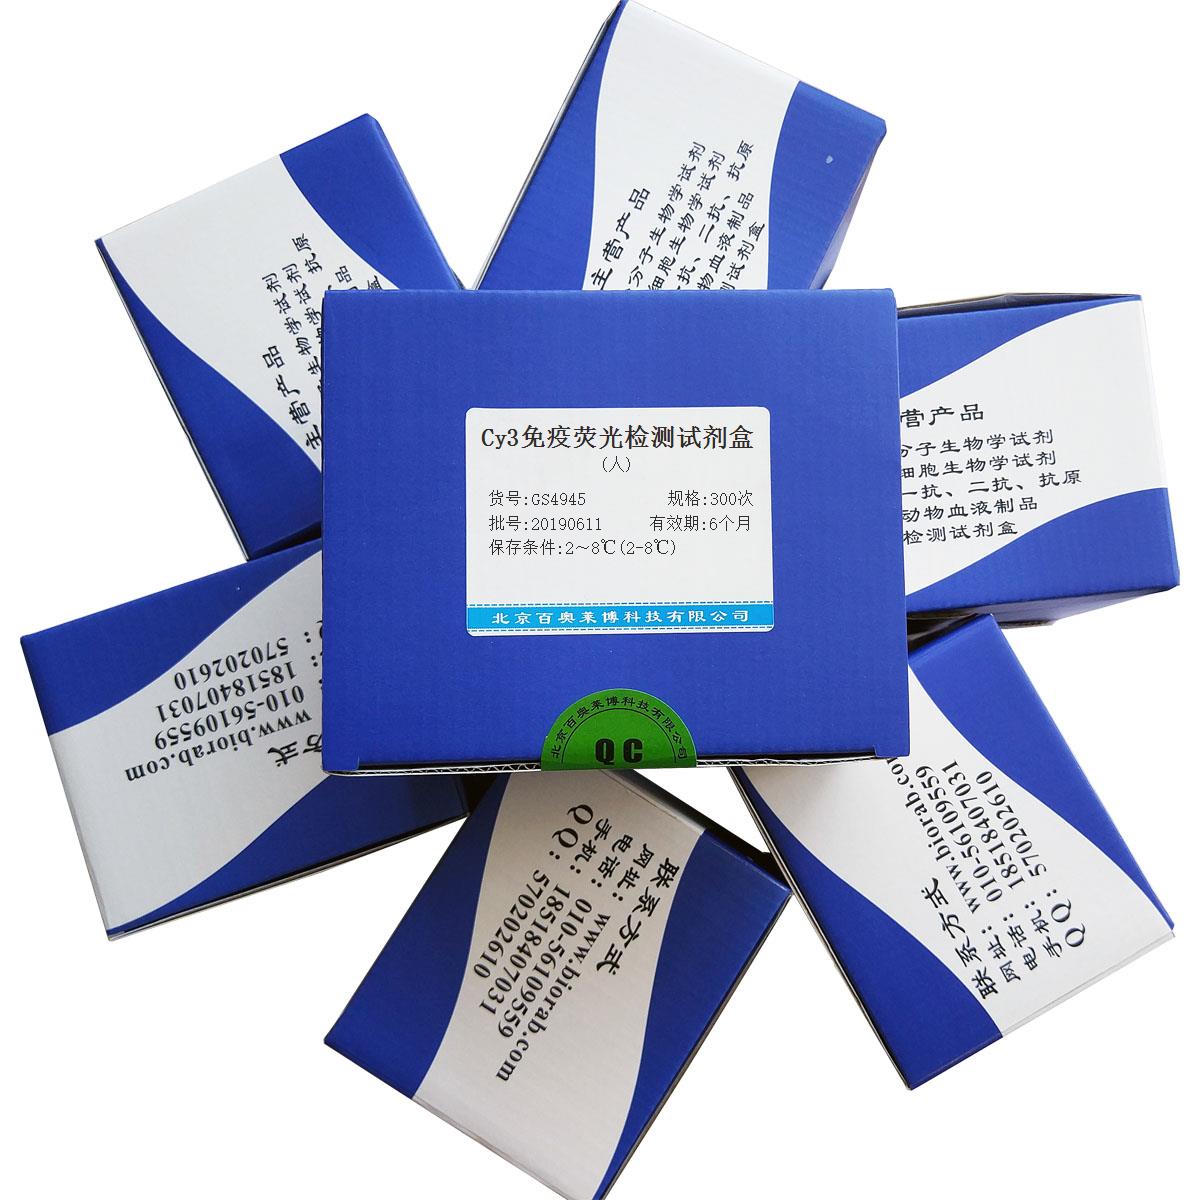 Cy3免疫荧光检测试剂盒(人)北京厂家